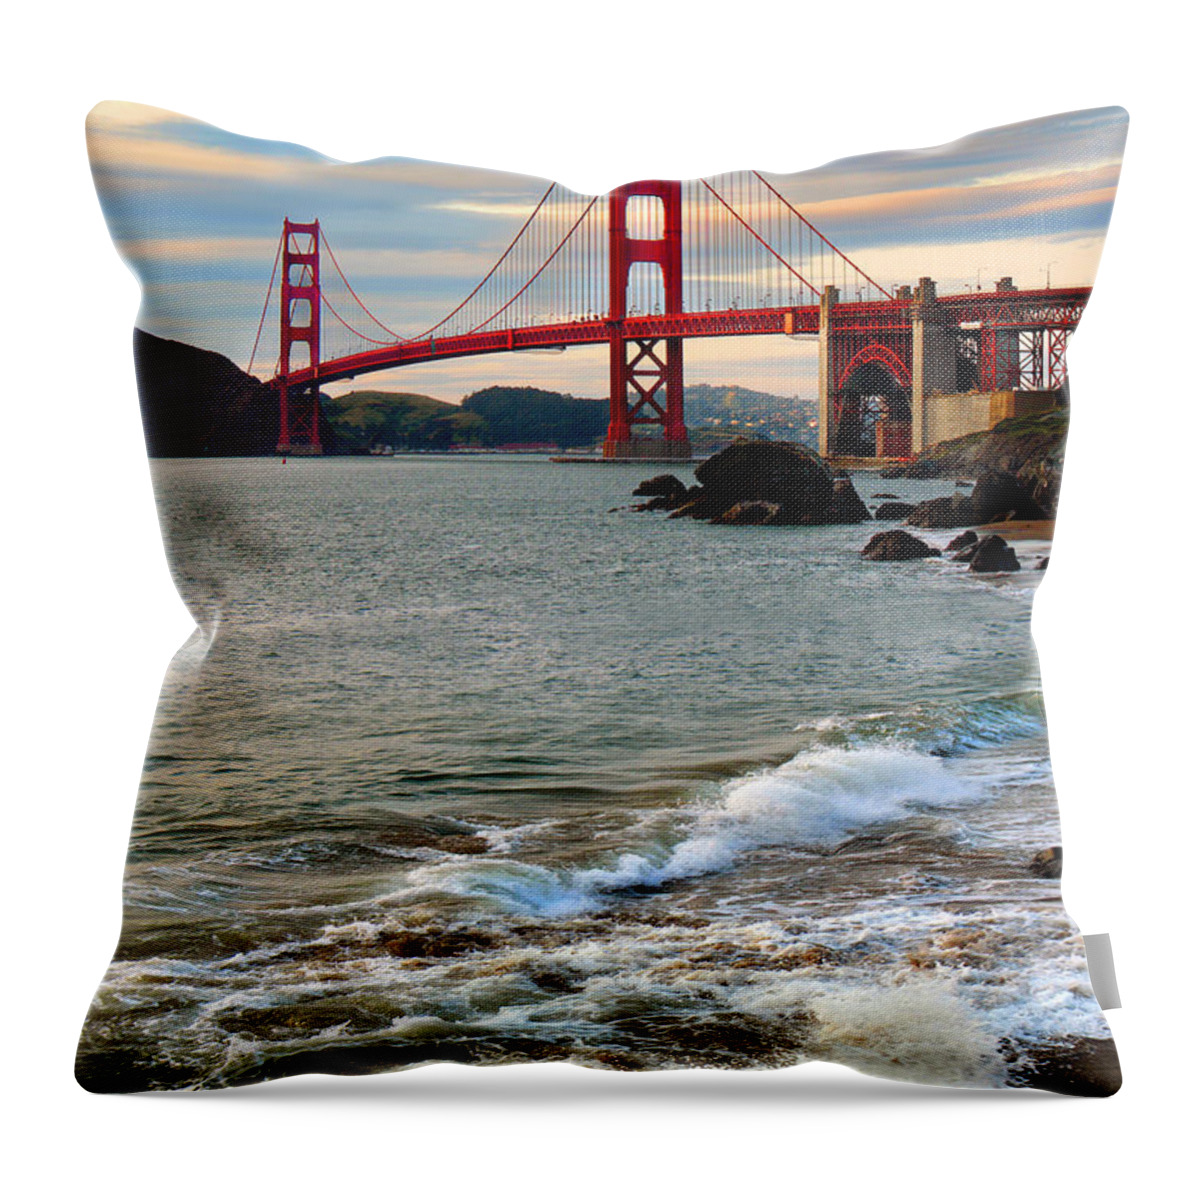 Golden Gate Bridge Poster Throw Pillow featuring the photograph Golden Gate Bridge and the Pacific Ocean at Sunset with Waves by Wernher Krutein